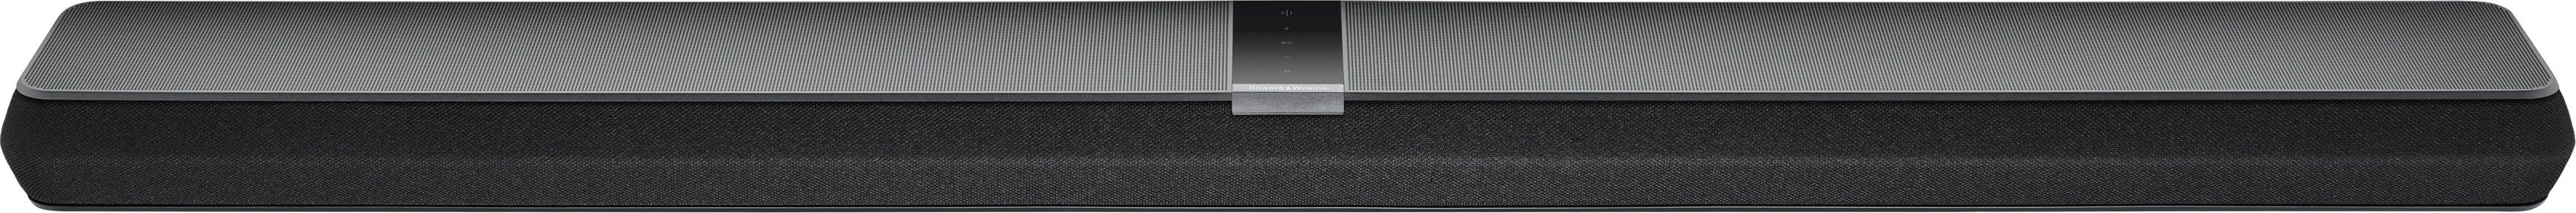 Bowers & Wilkins Panorama 3 Dolby 2) Soundbar W, 3.1.2 400 Atmos, Airplay (aptX Bluetooth, Wireless